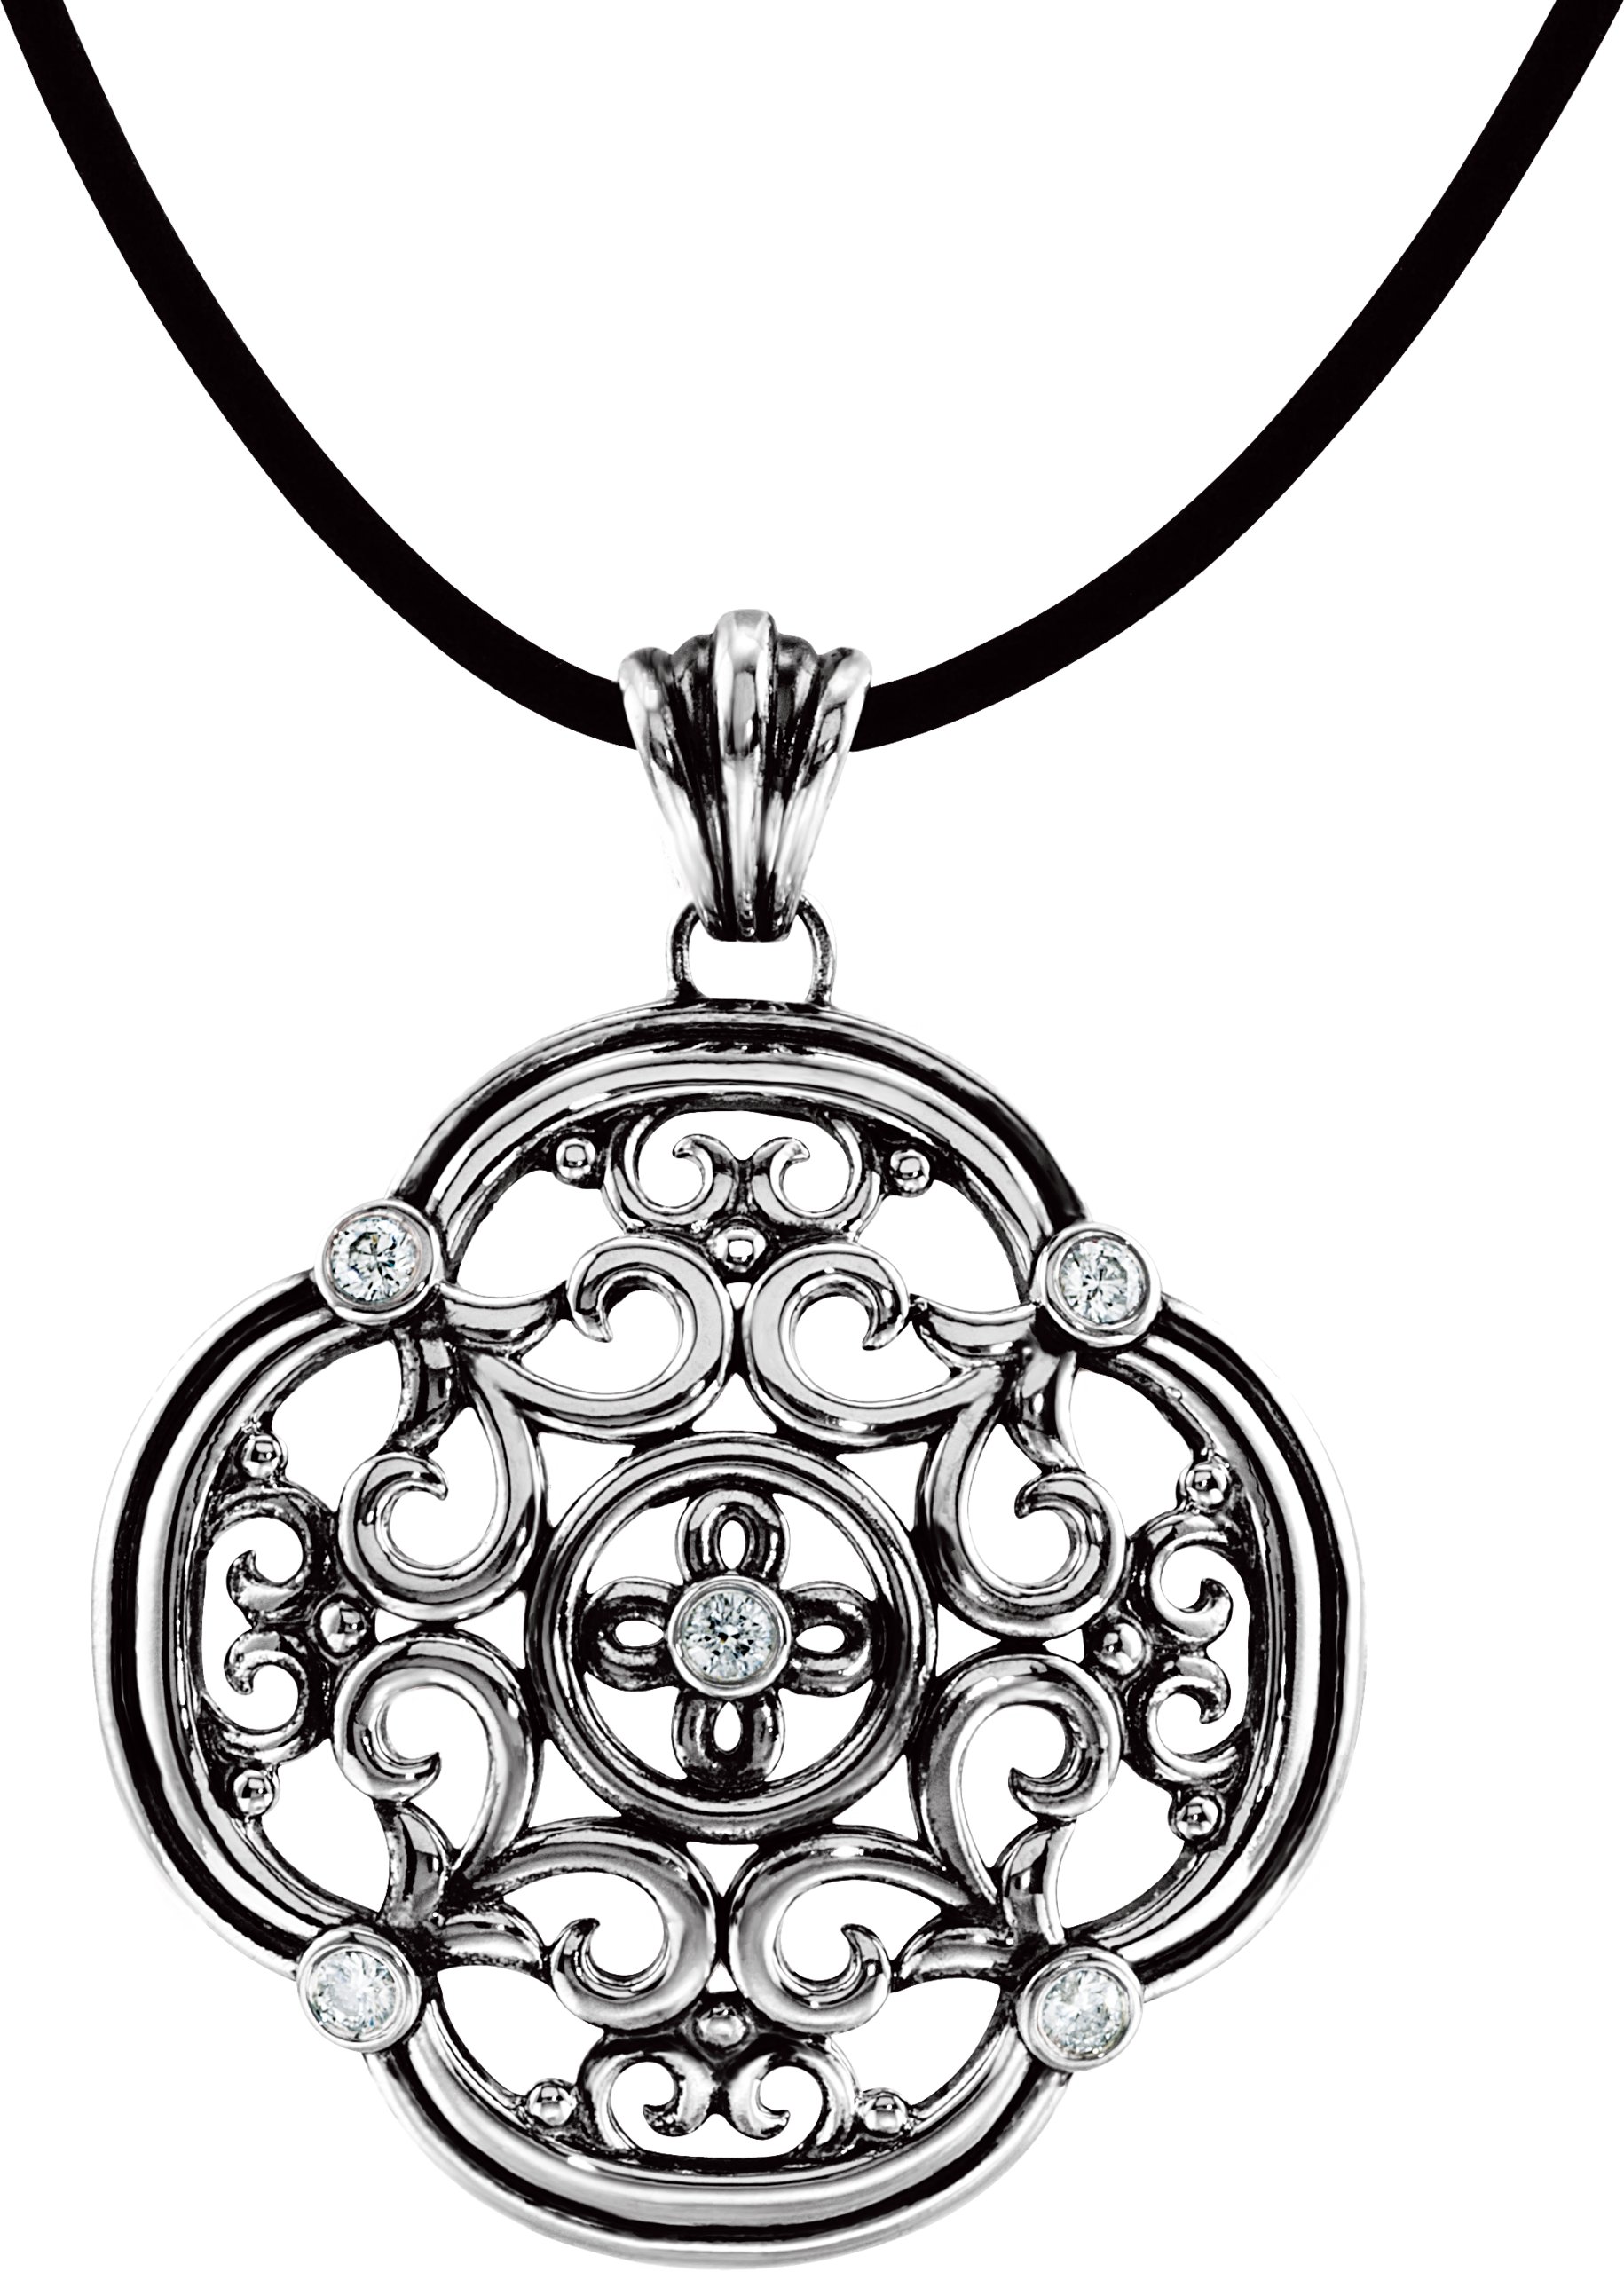 Filigree Design Pendant or Necklace